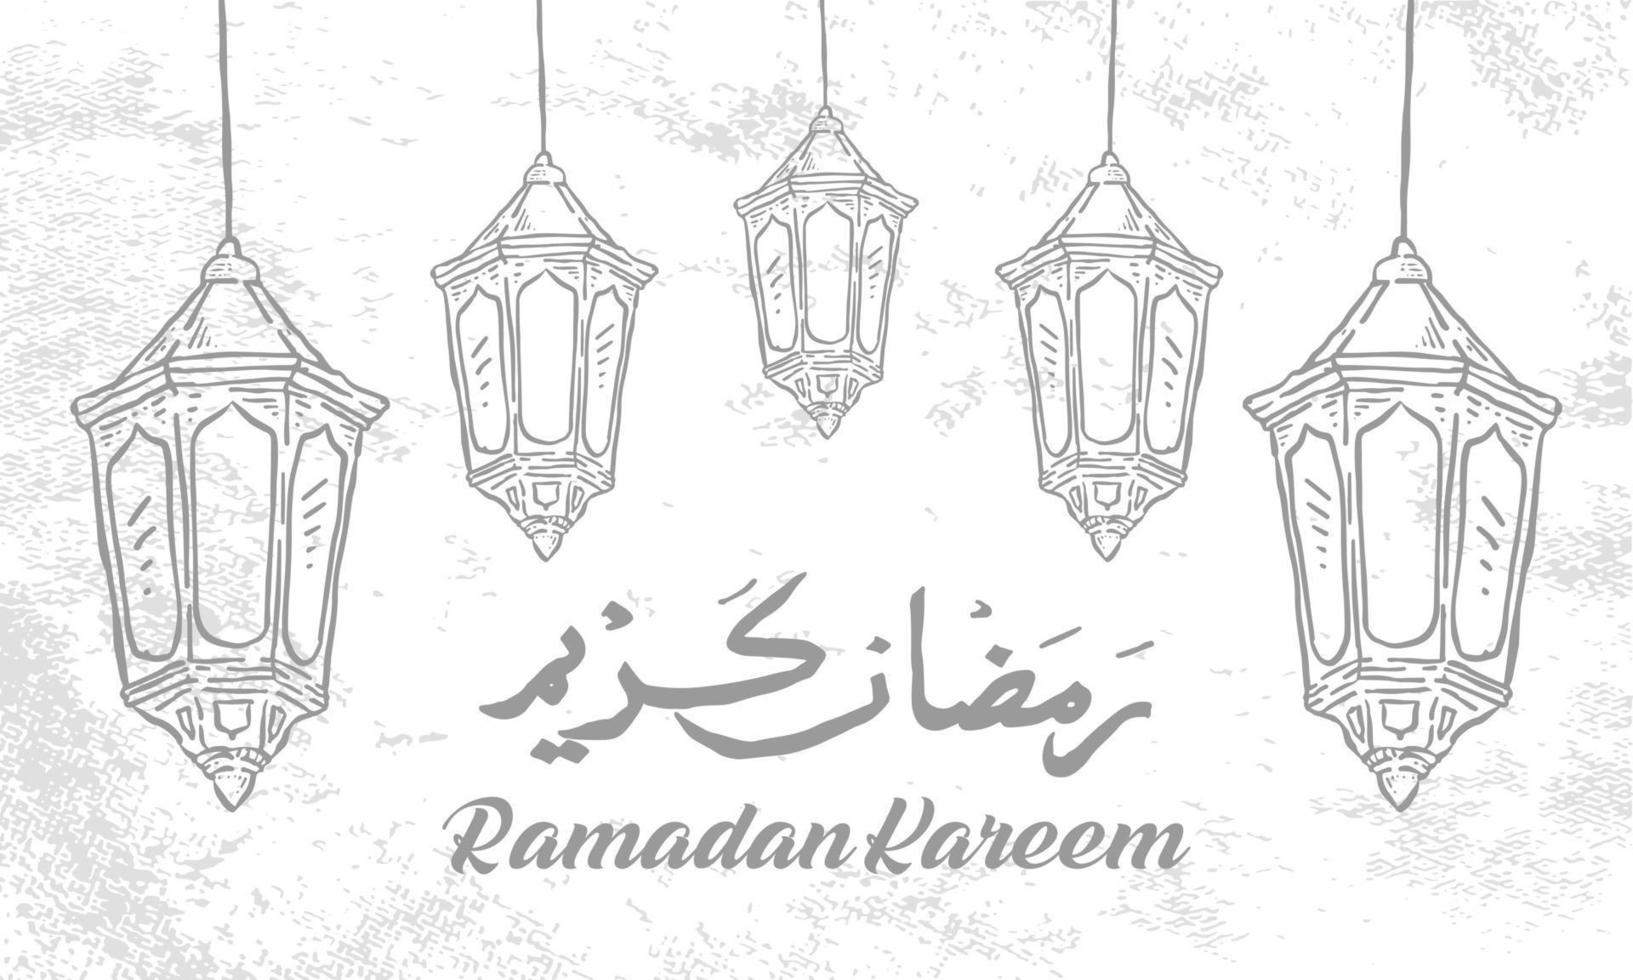 boceto dibujado a mano de la linterna de ramadán con textura de pincel para ramadan kareem vector